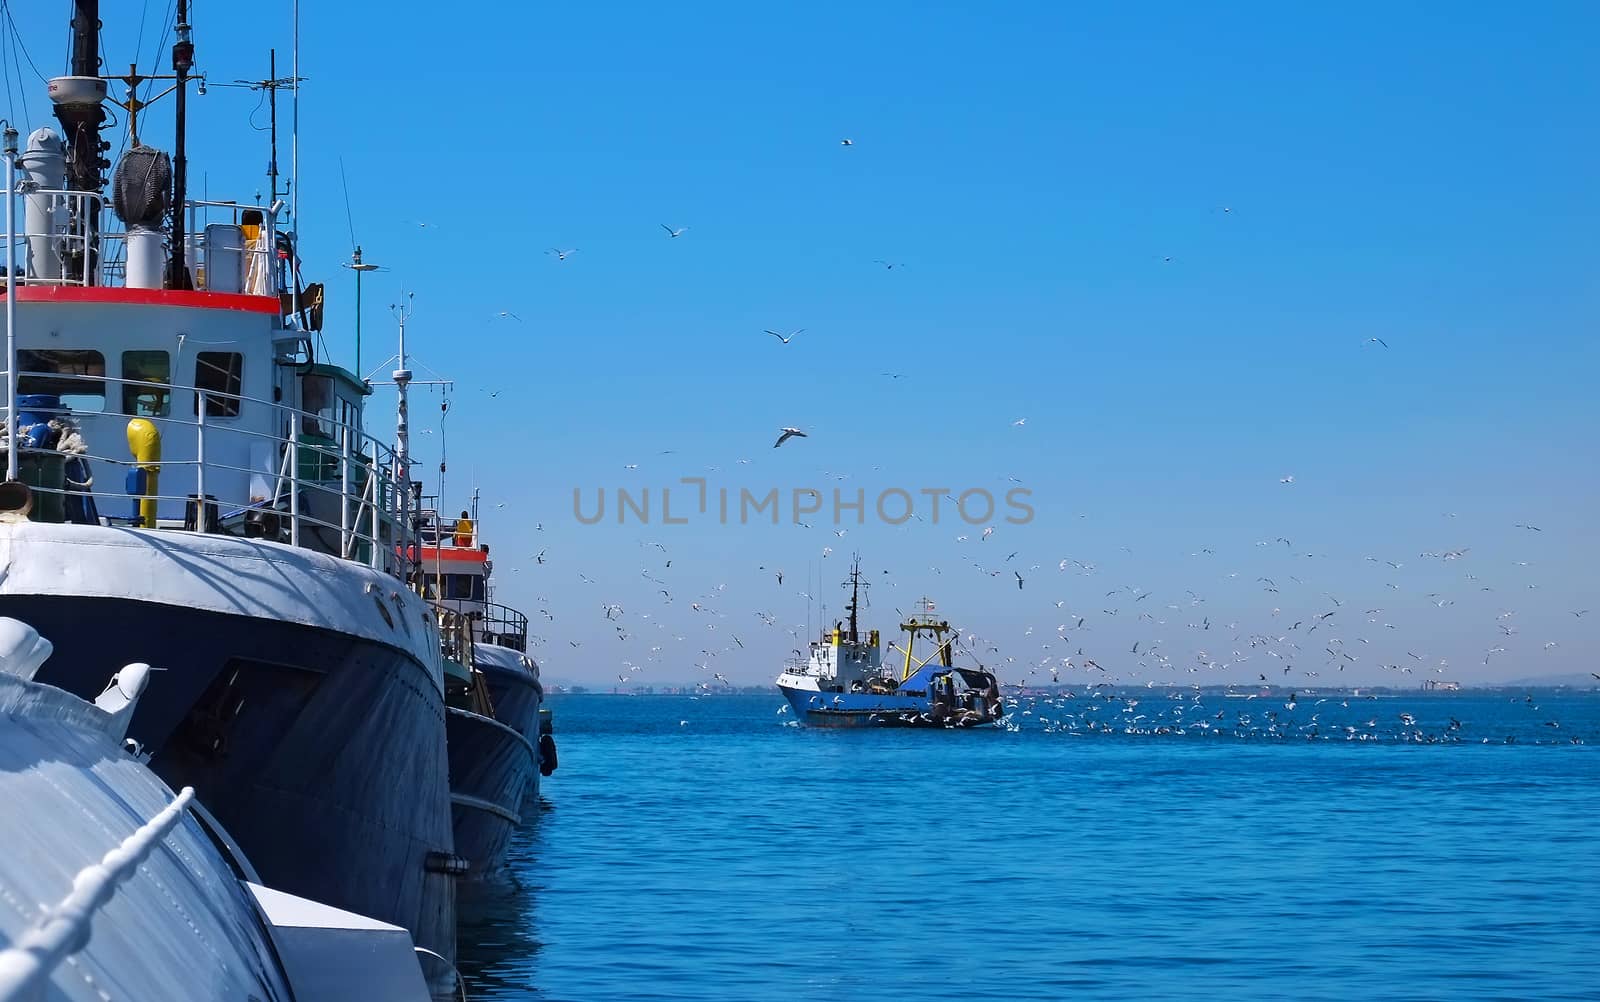 Flock of seagulls follow the fishing vessel in port.